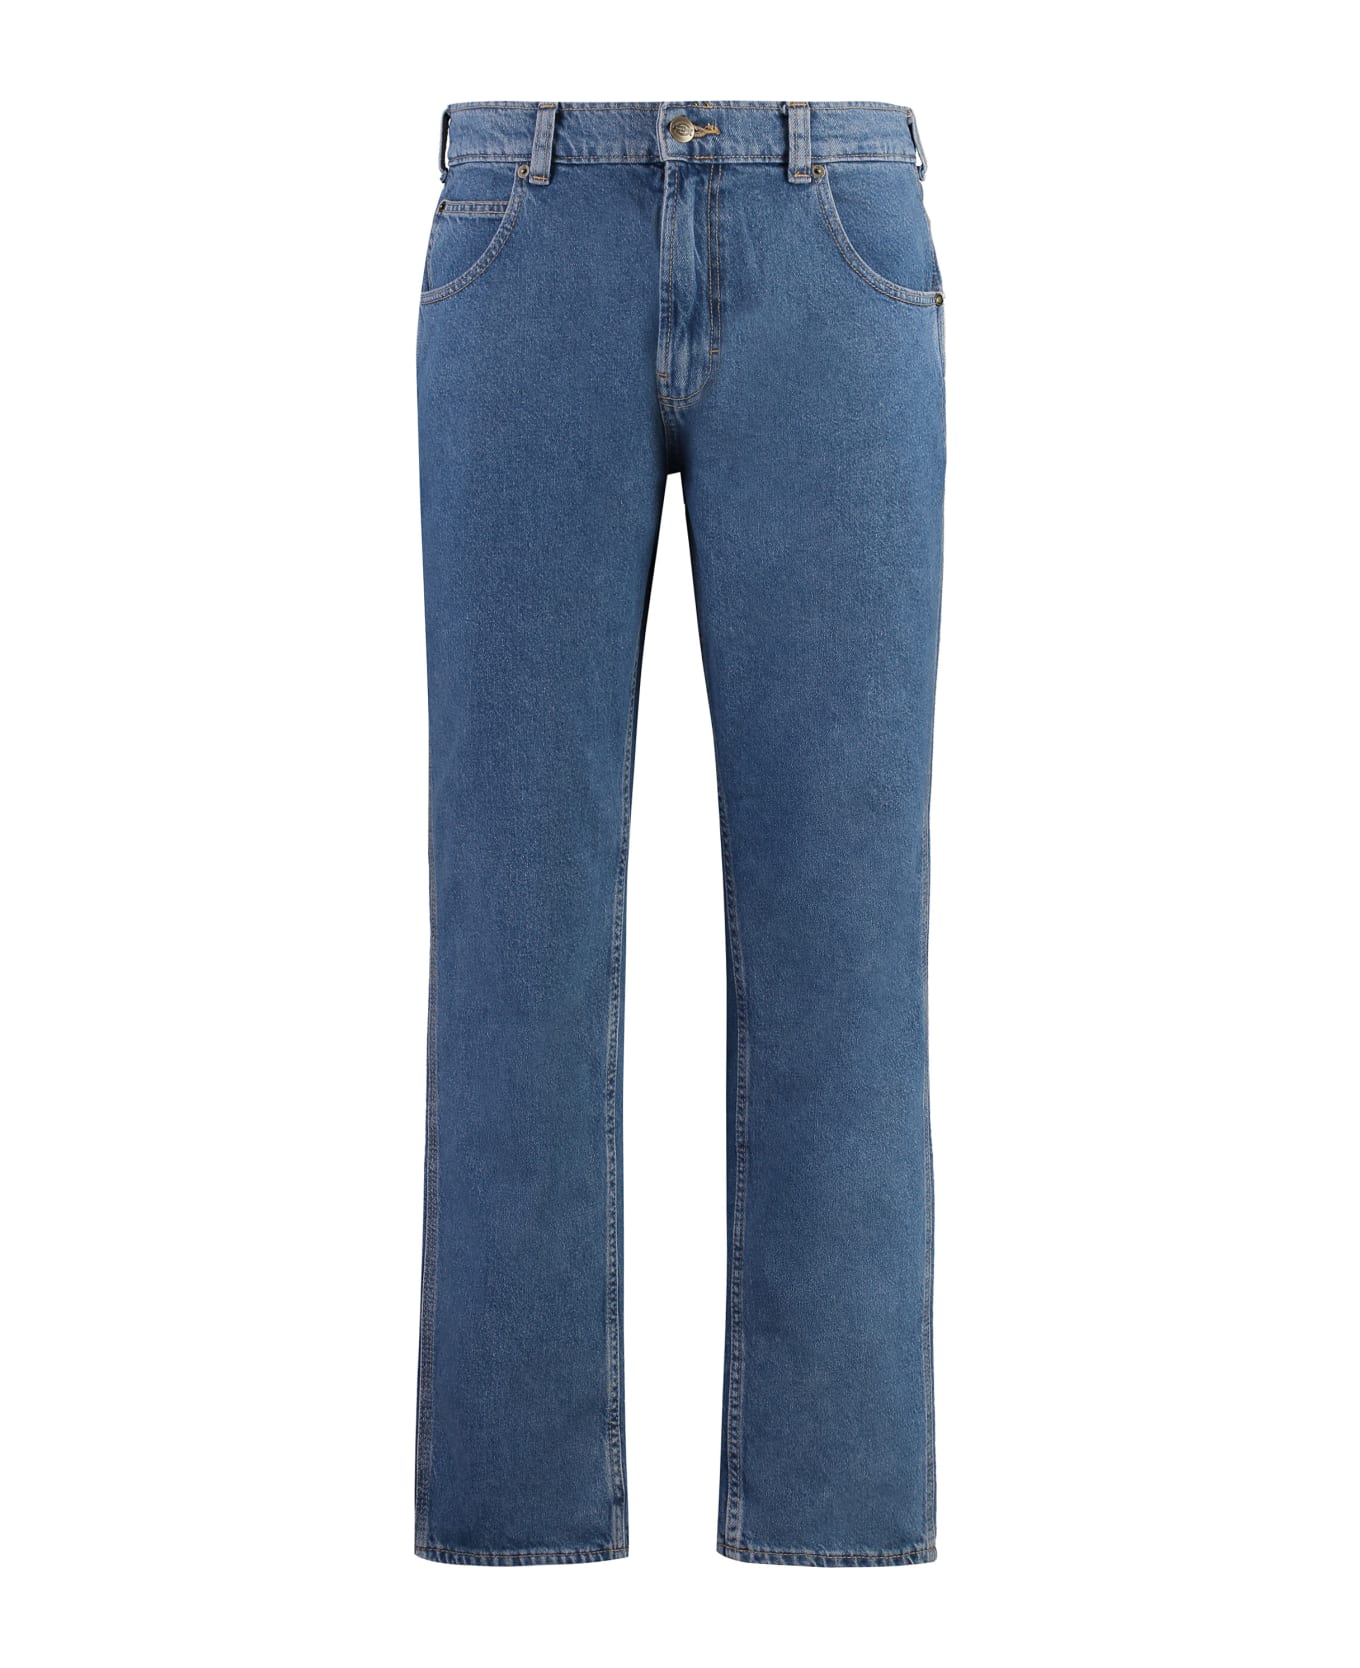 Dickies Houston 5-pocket Jeans - Denim